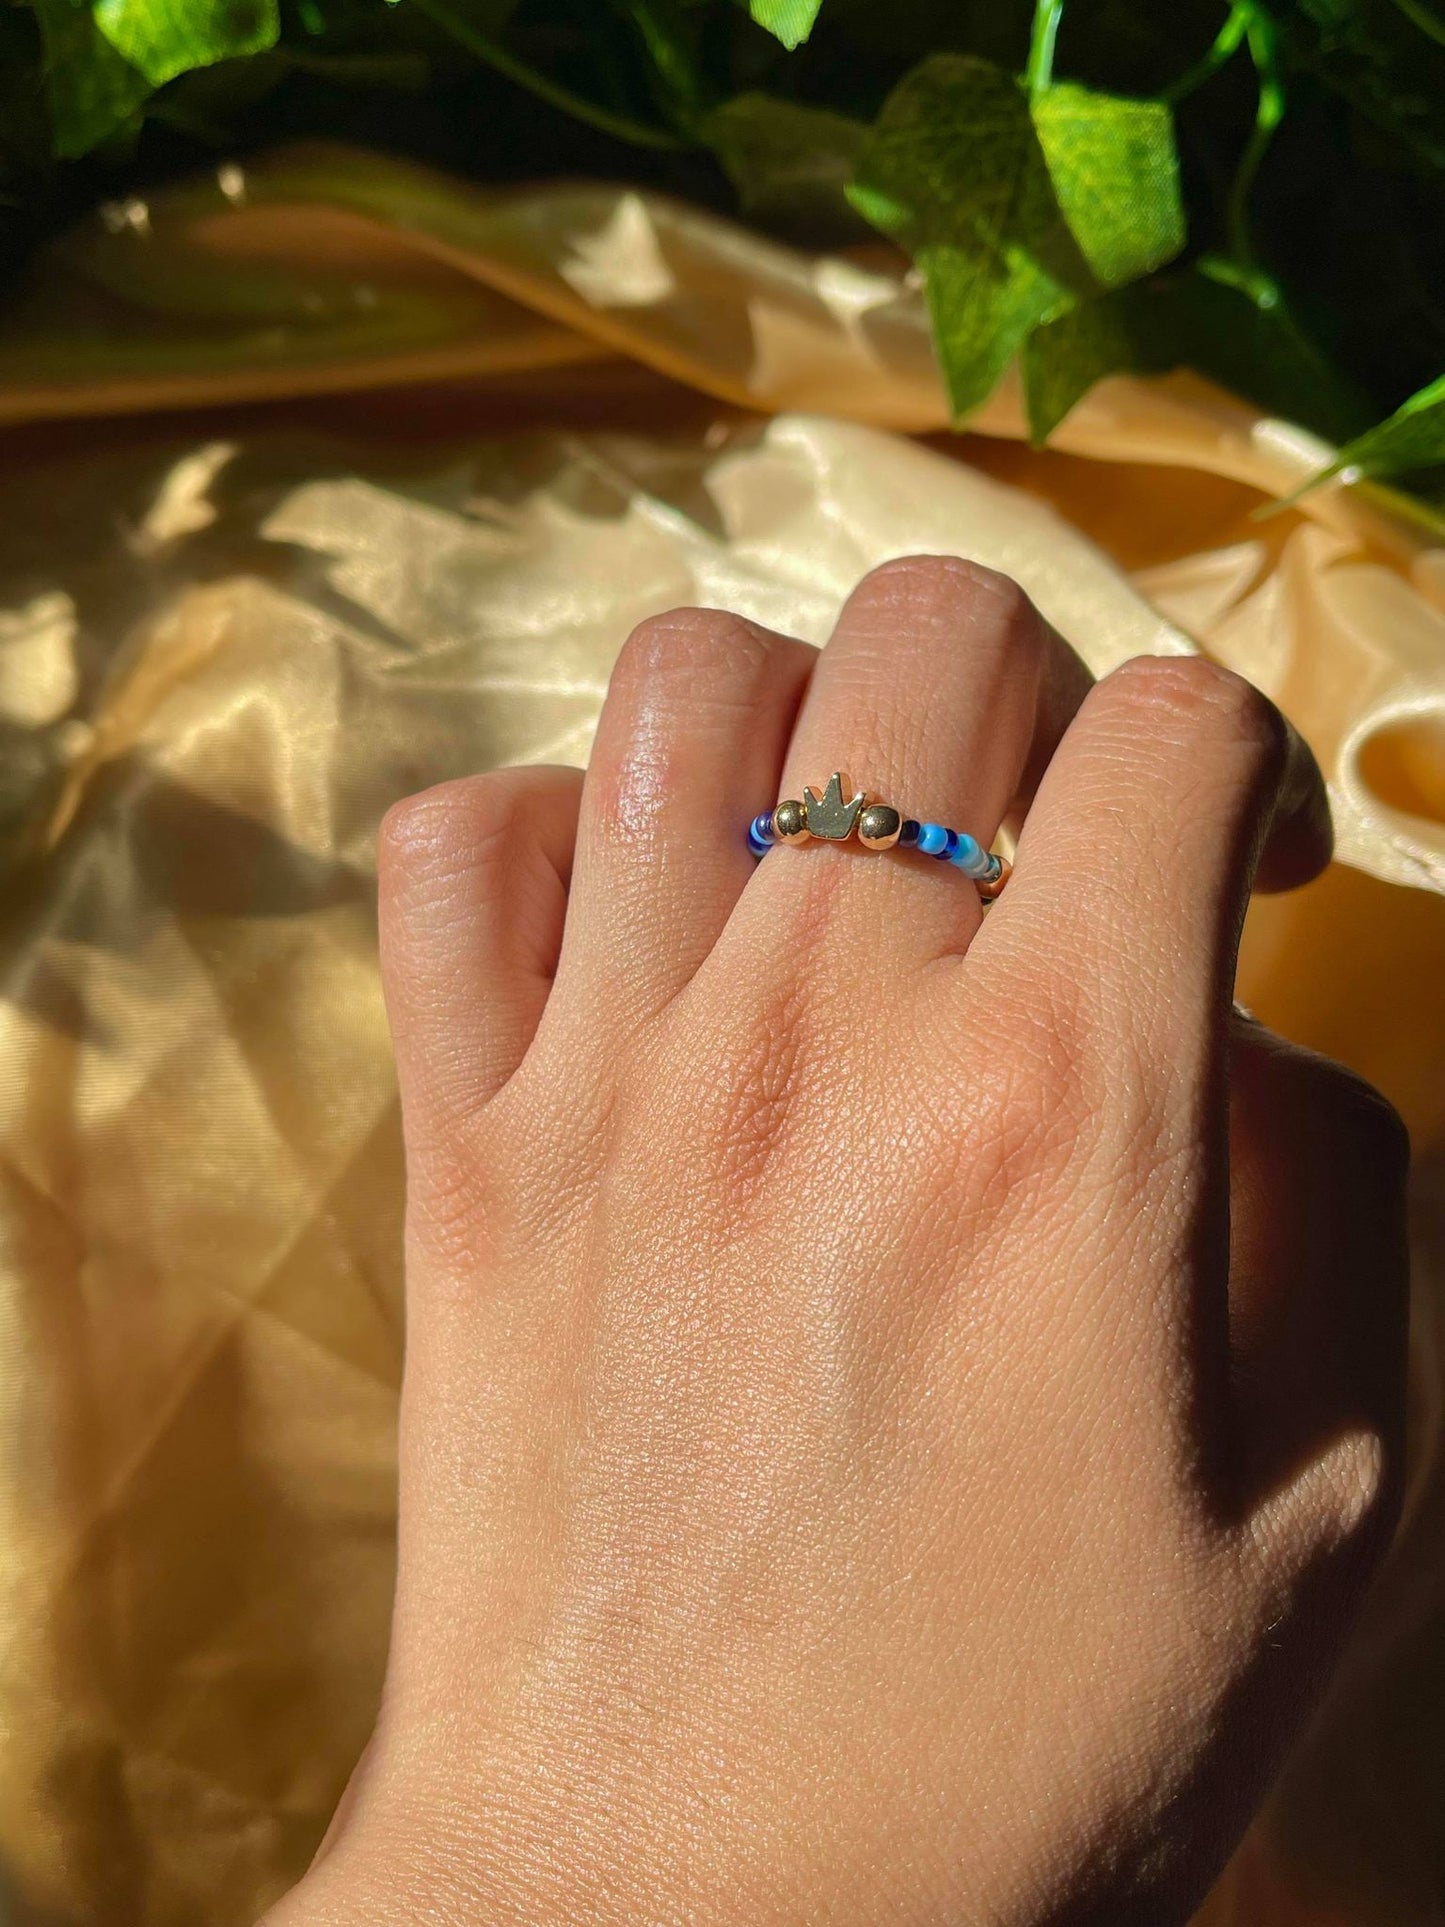 Blue Crown Ring